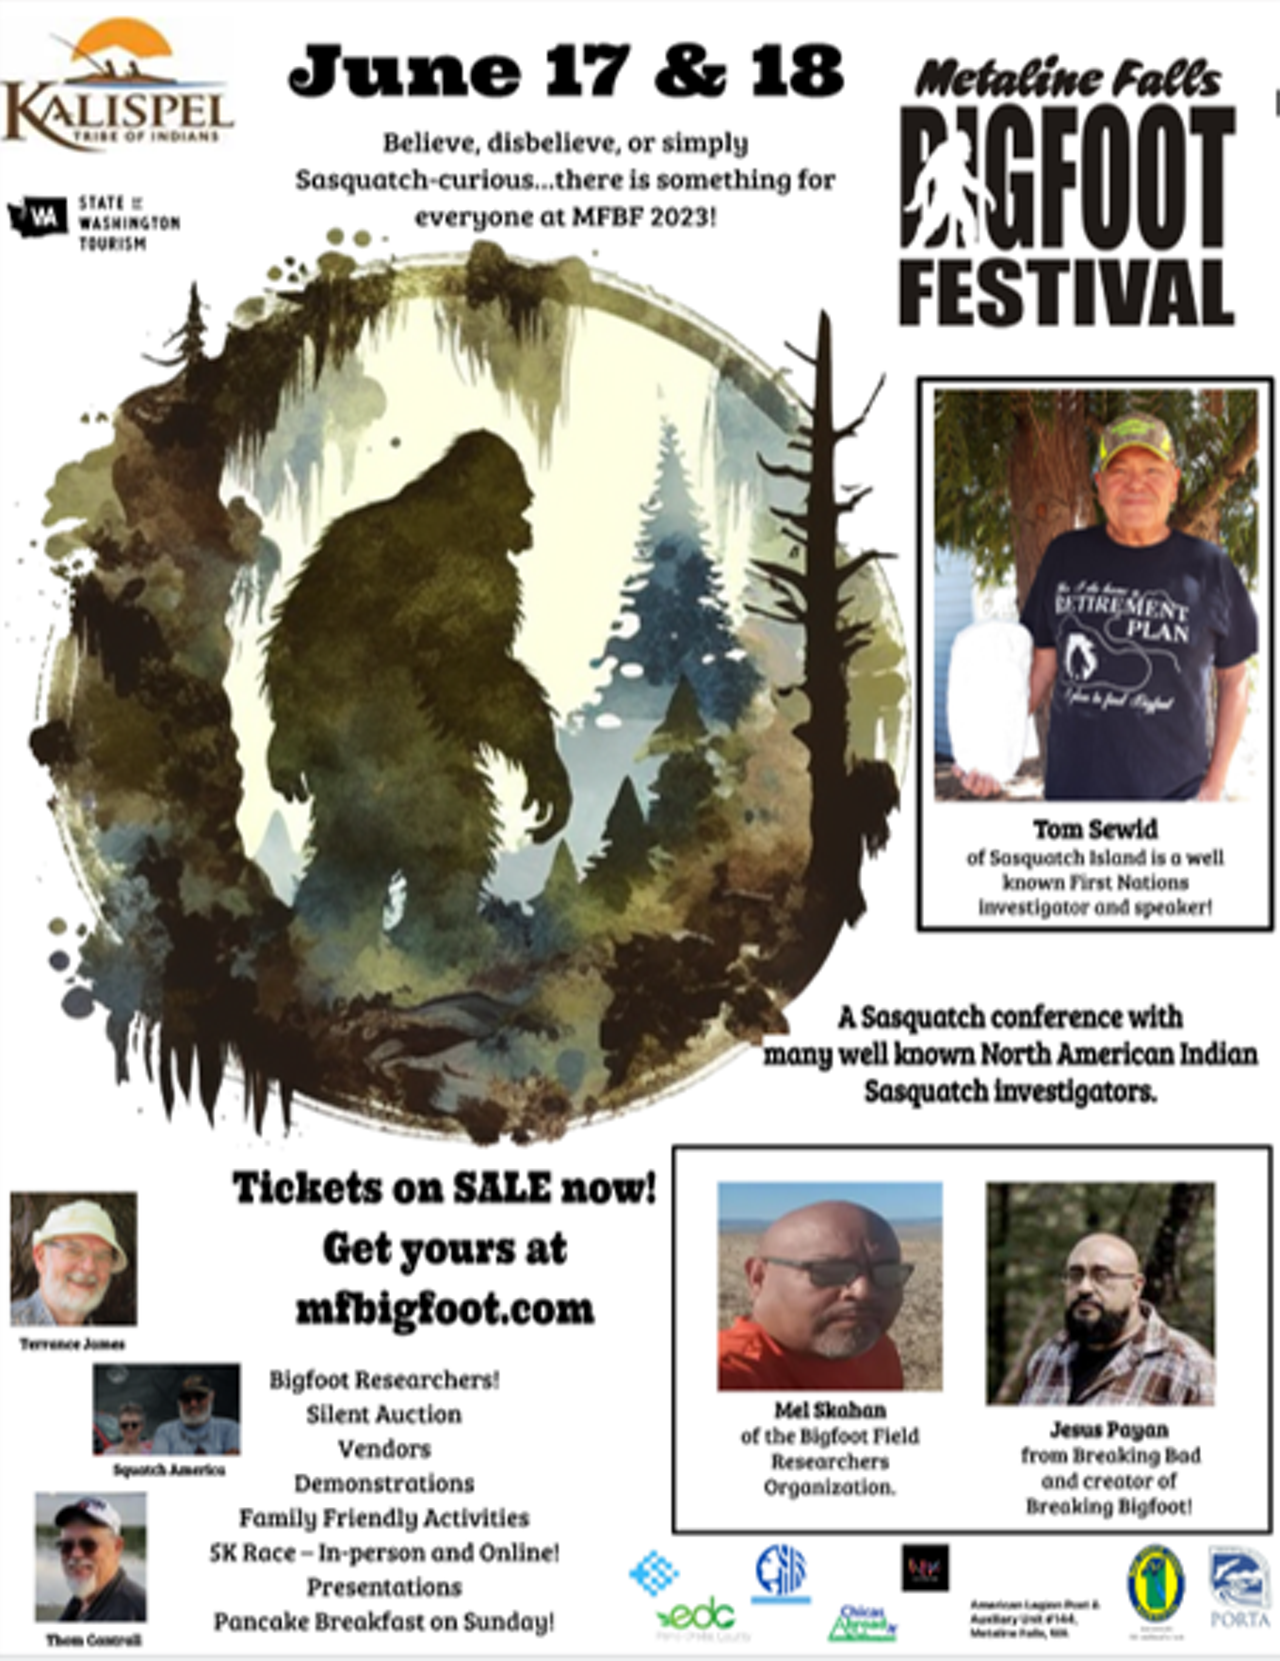 Metaline Falls Bigfoot Festival Metaline Falls Community, Festival The Pacific Northwest